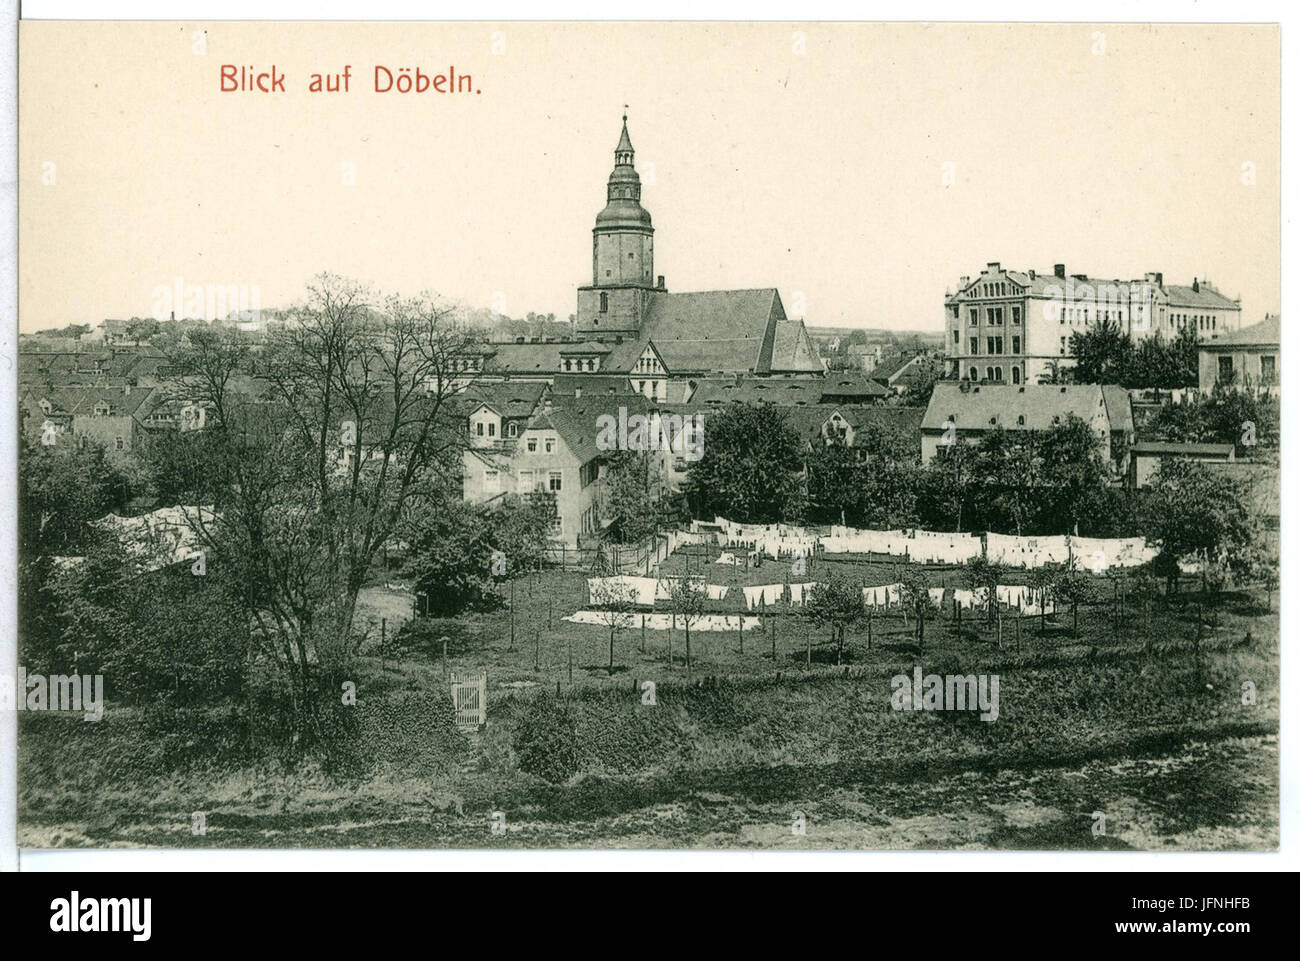 08721-Döbeln-1907-Blick auf Döbeln-Brück & Sohn Kunstverlag Banque D'Images